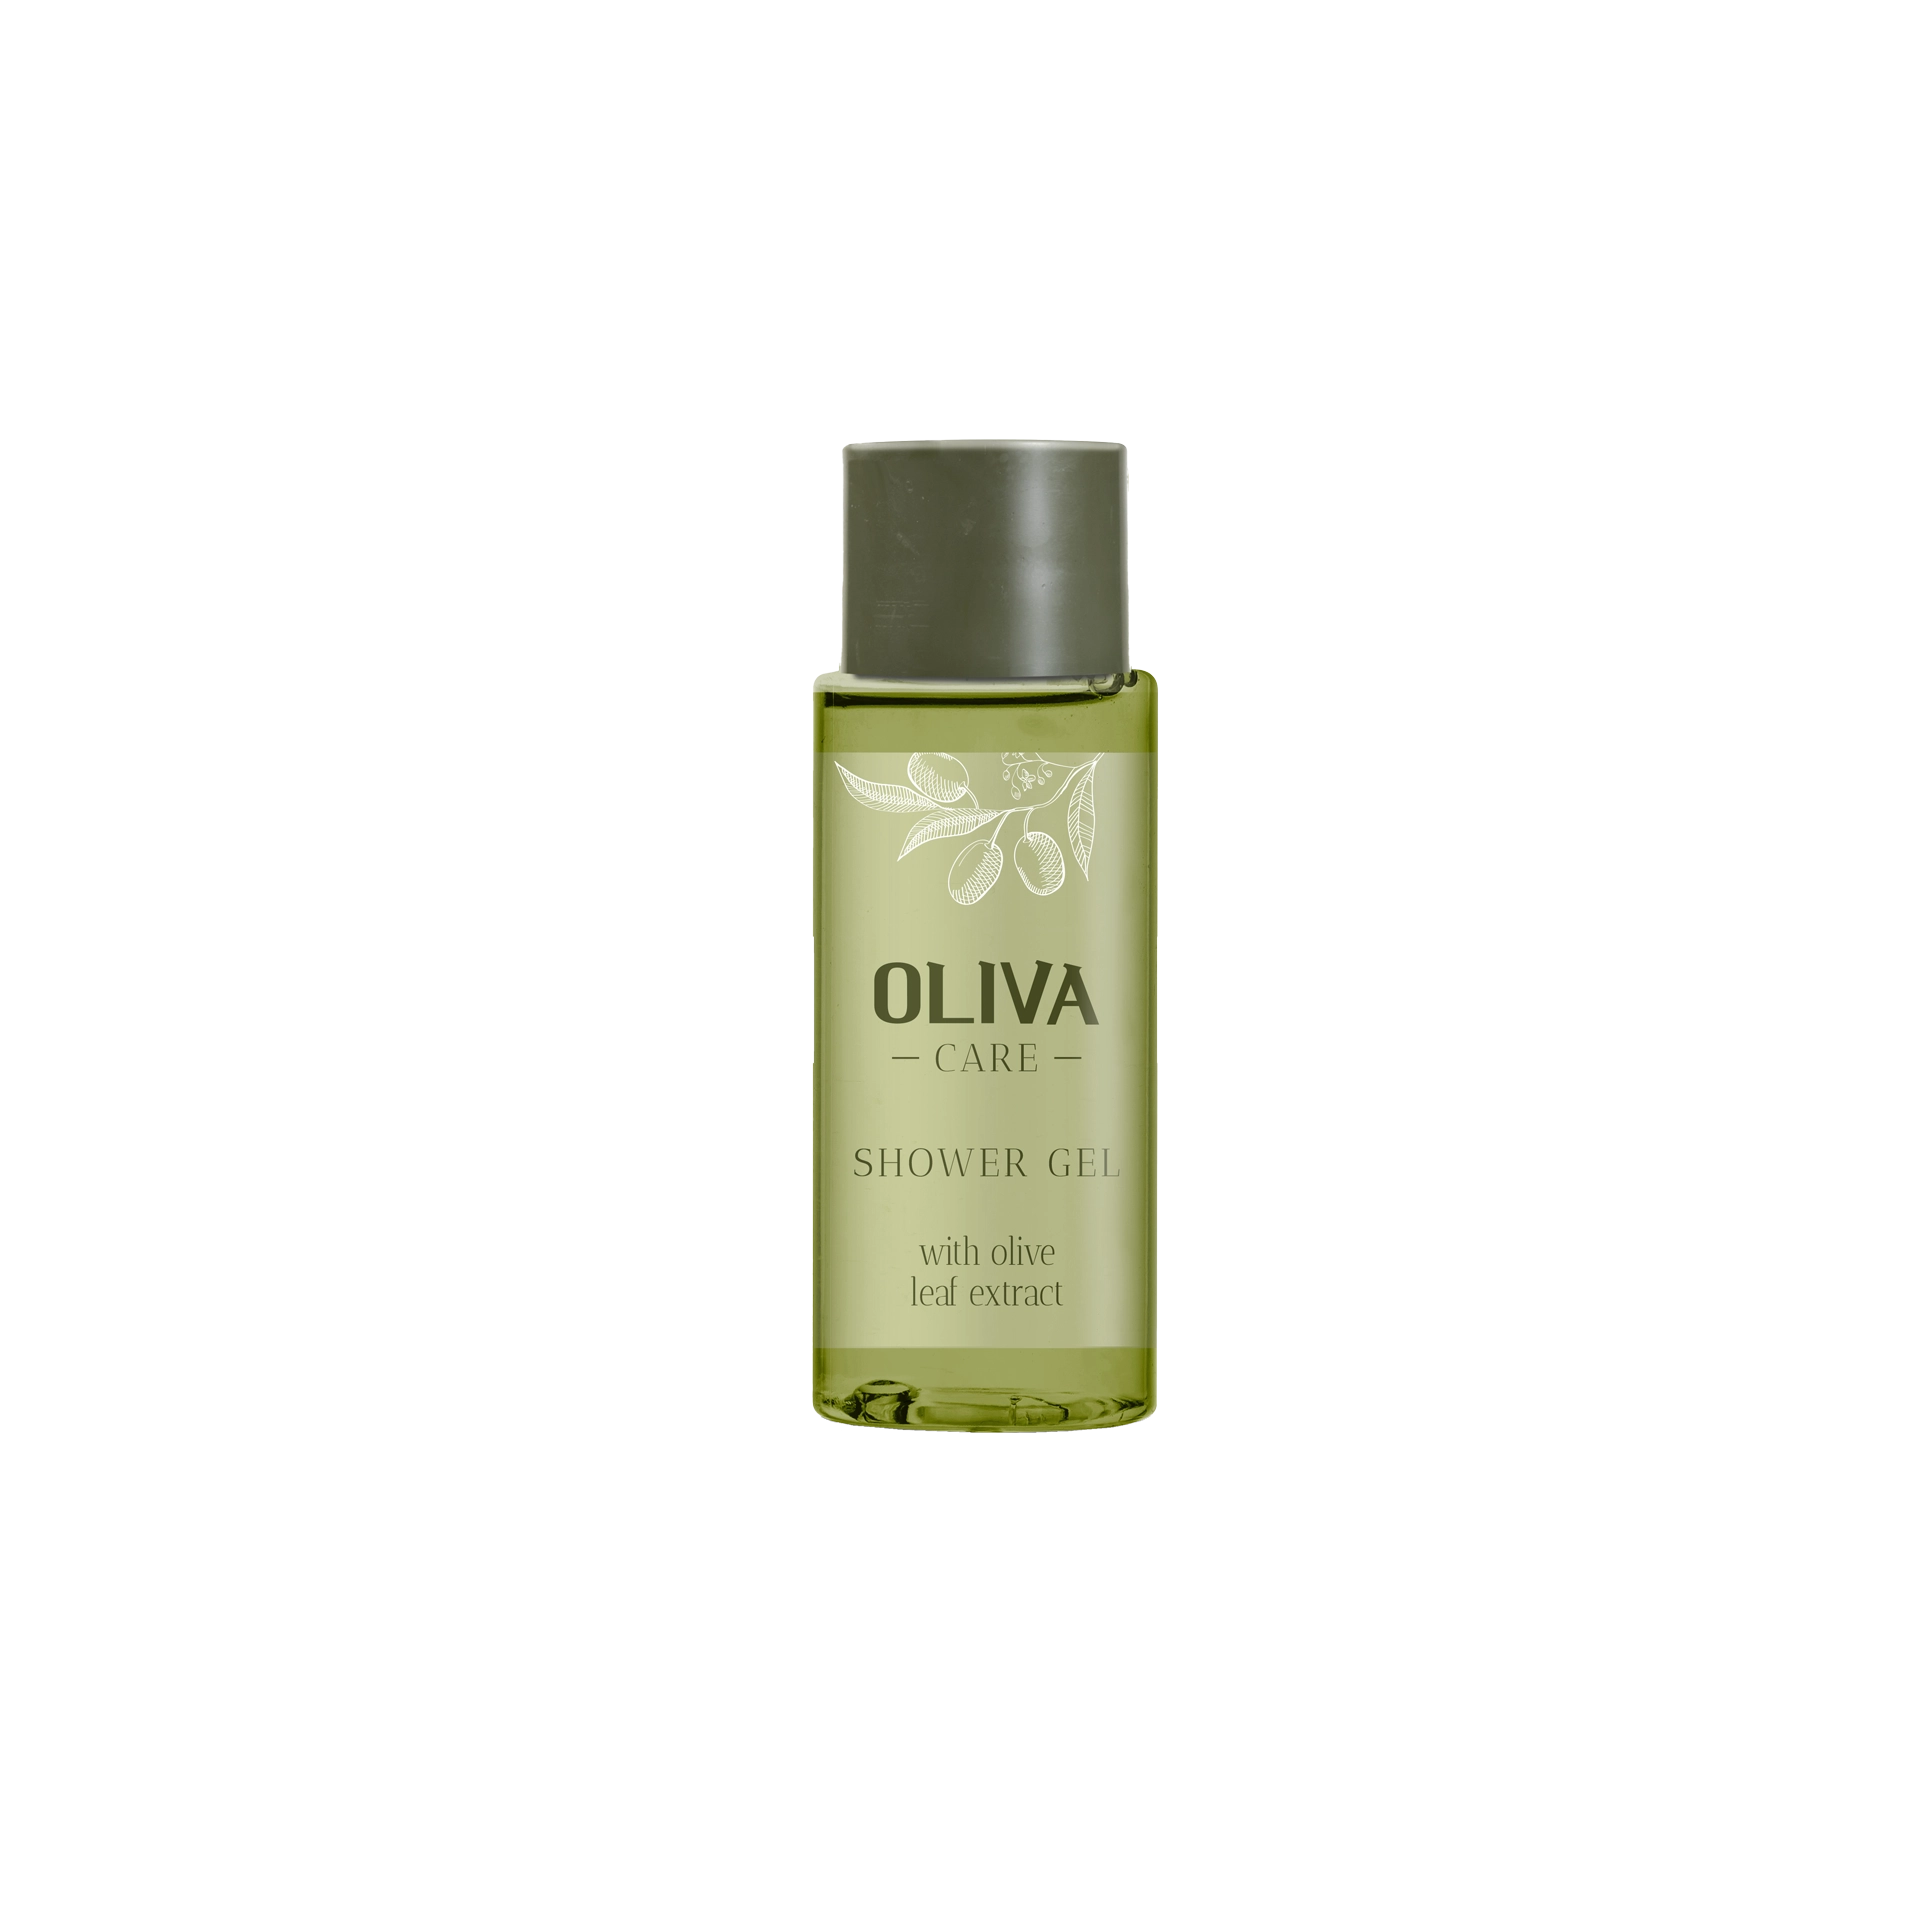 Badeduschgel | Oliva Care mit Olivenblattextrakt Flacon | 30 ml